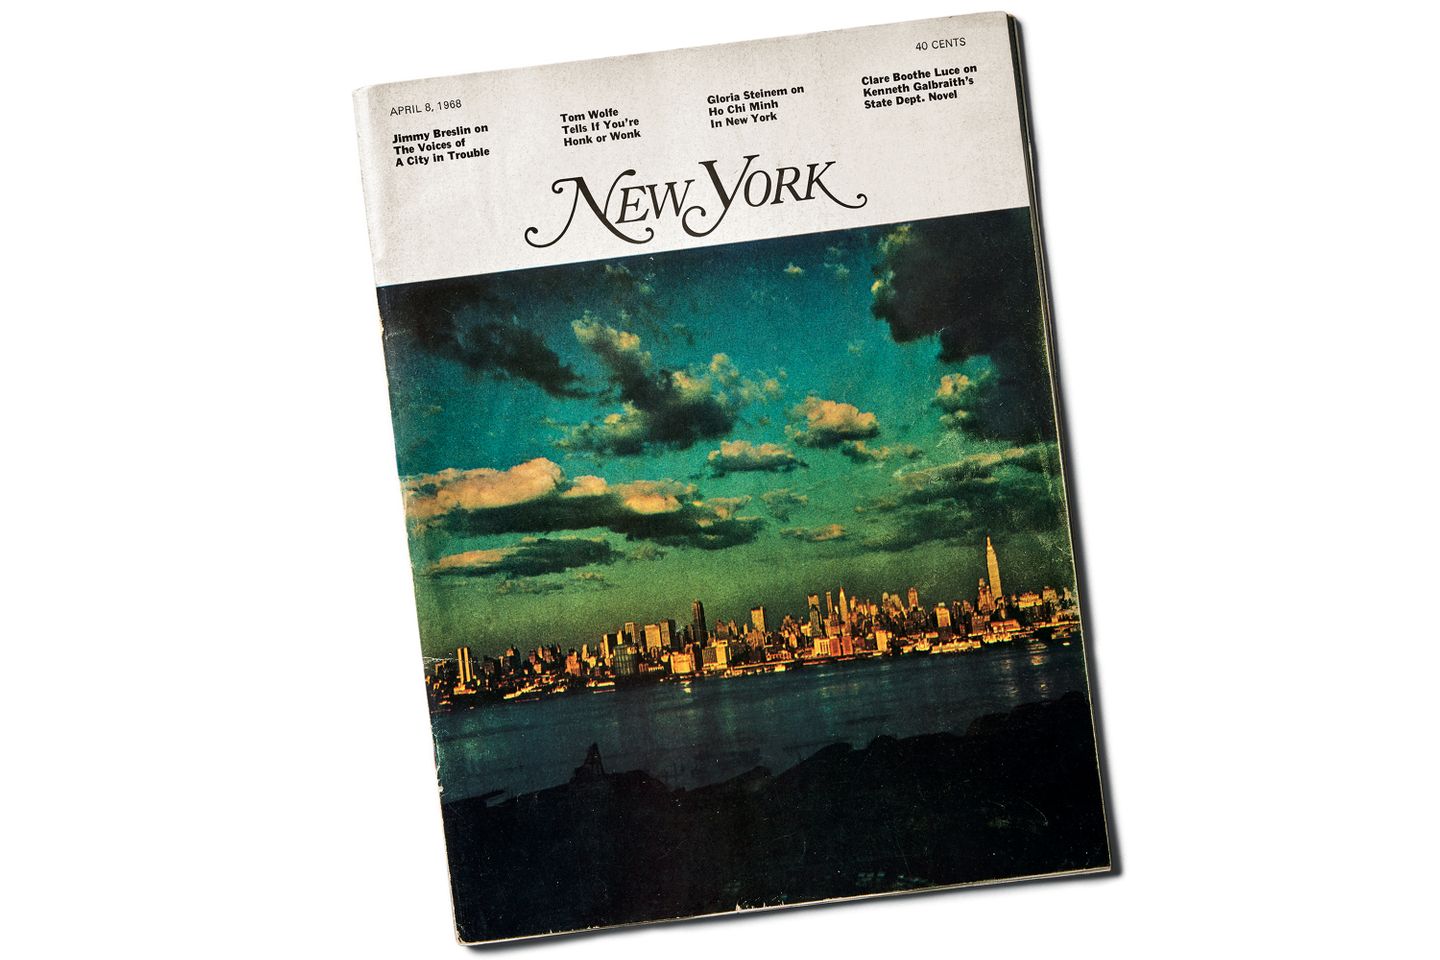 Michael's, New York Magazine